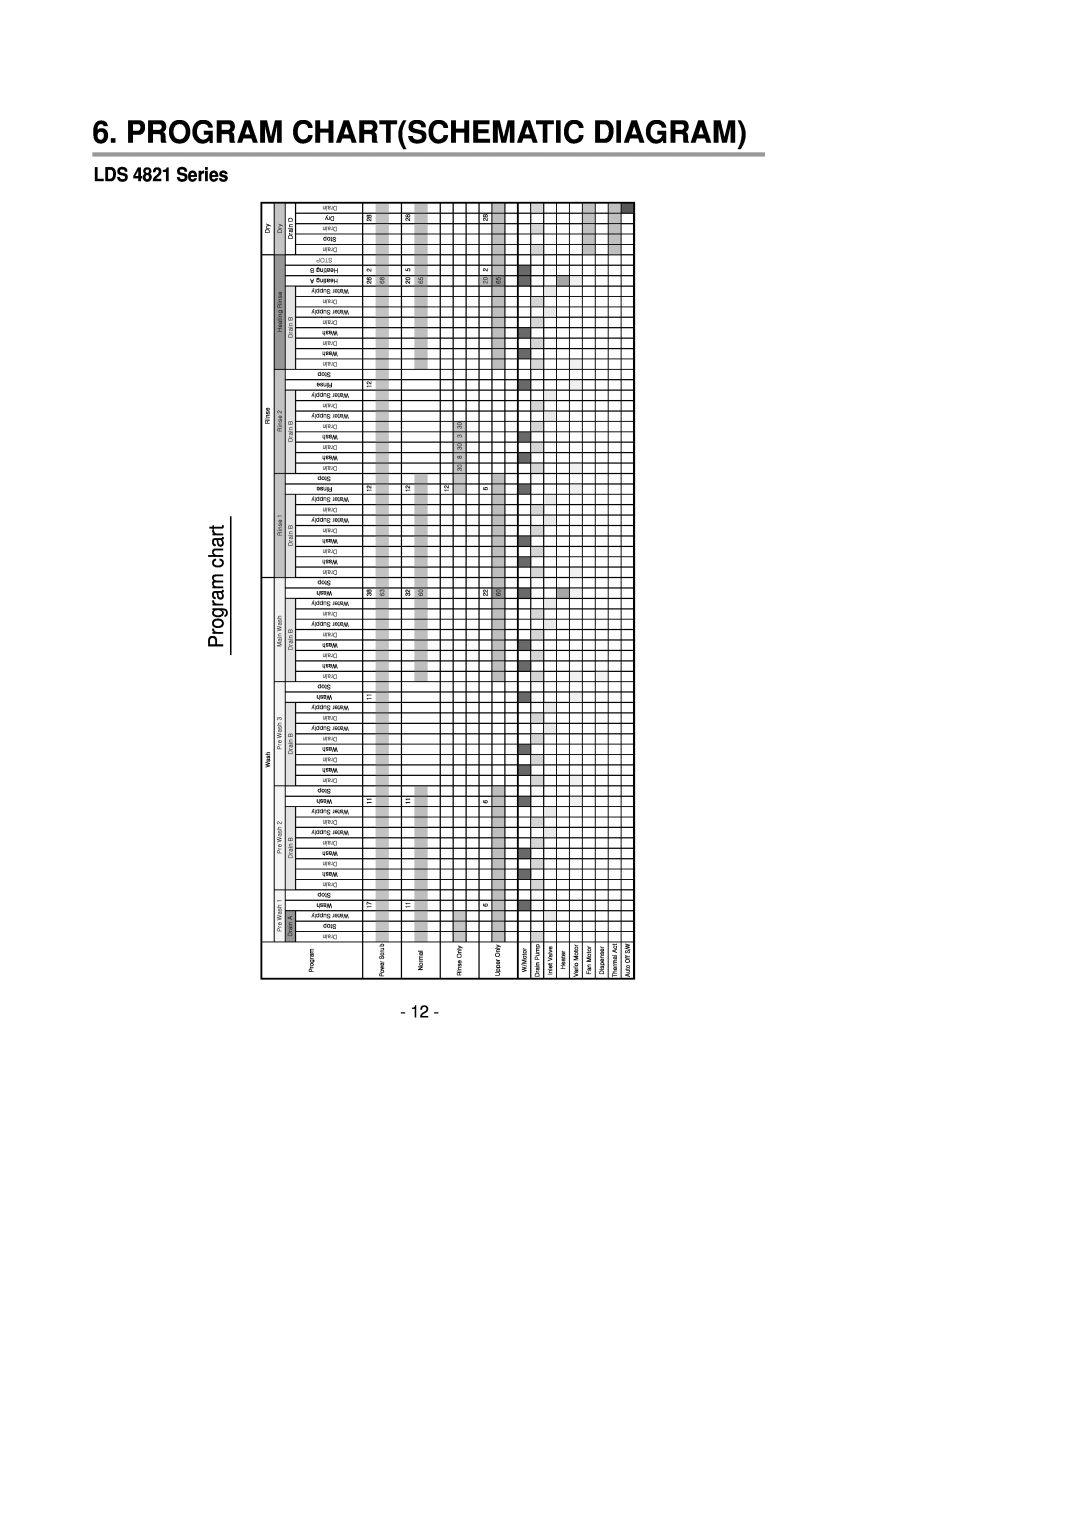 LG Electronics LDS4821(WW service manual Program Chartschematic Diagram, LDS 4821 Series, Program chart 